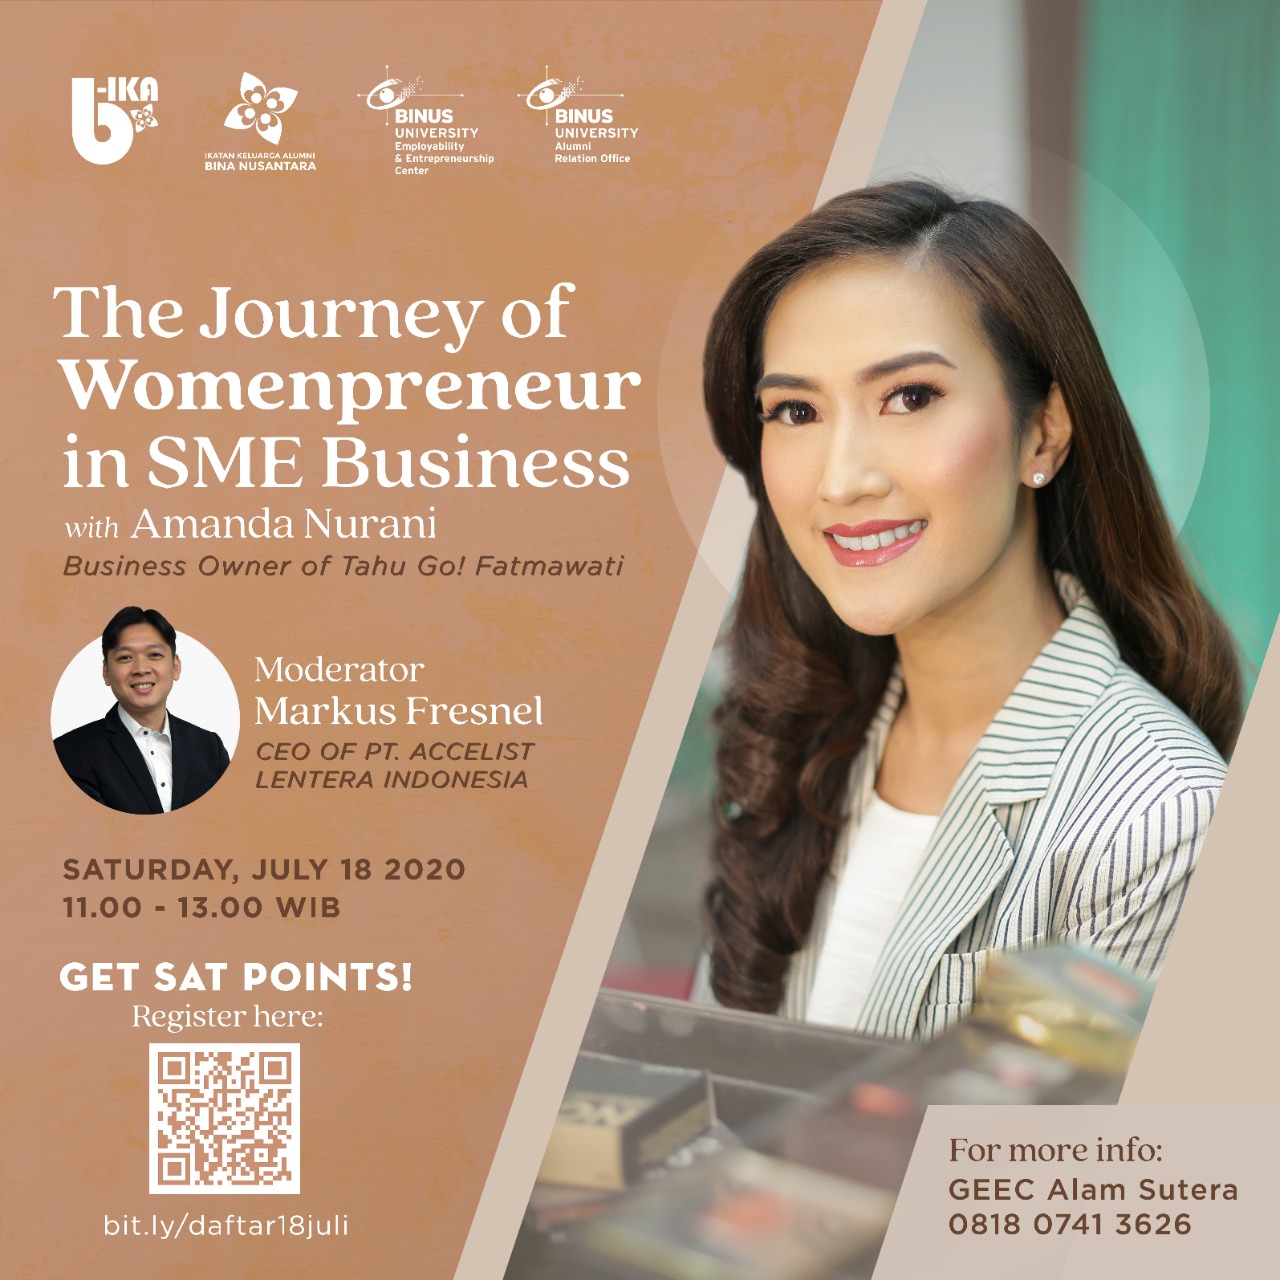 The Journey of Womenpreneur in SME Business